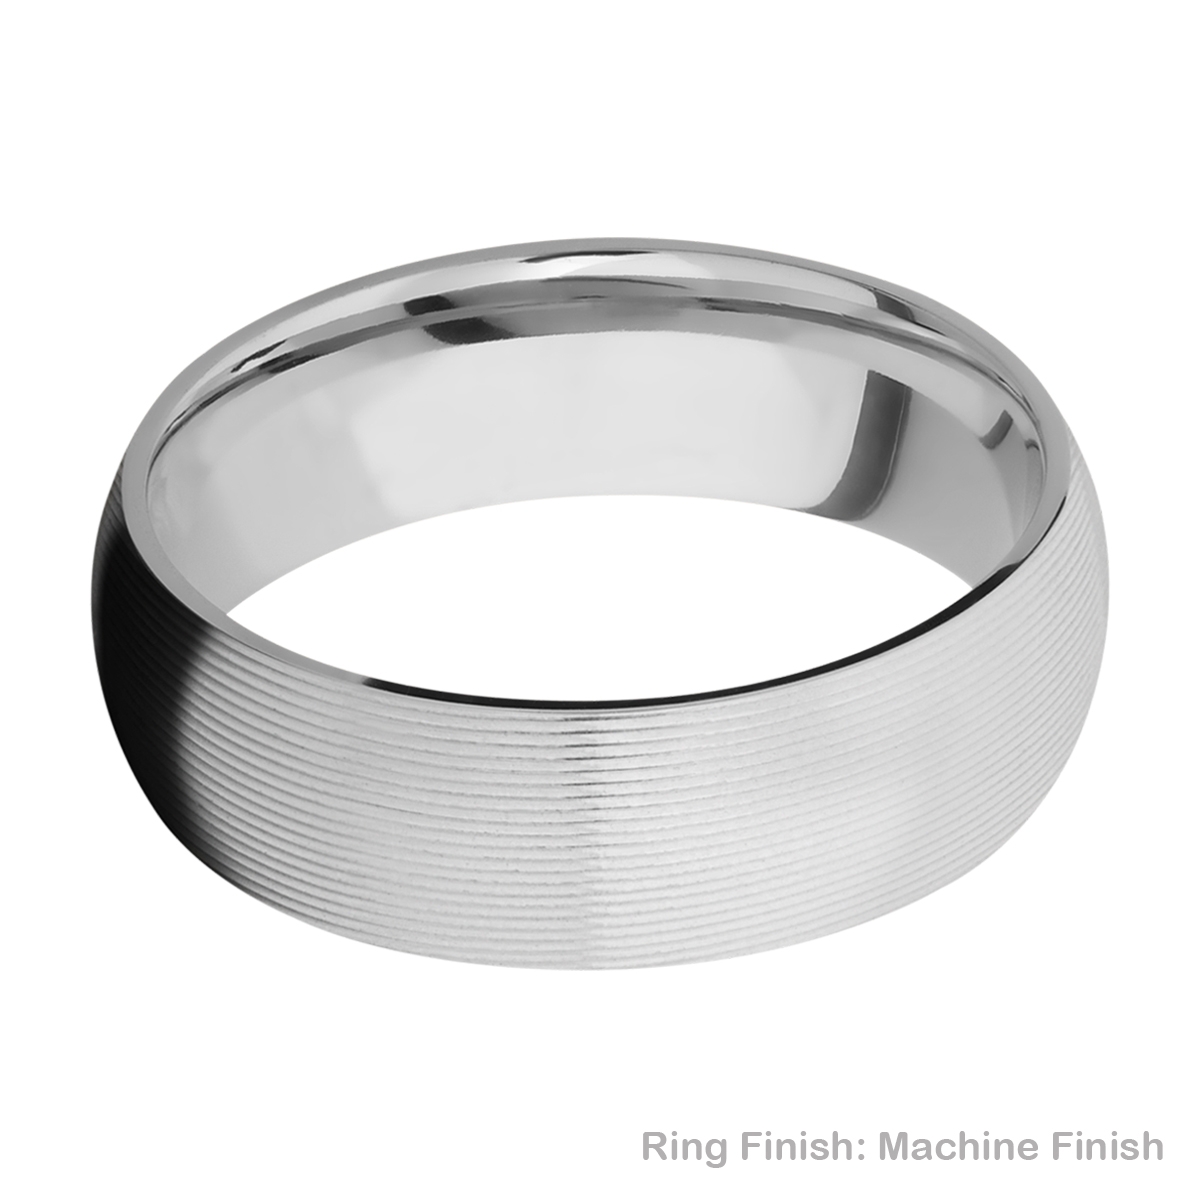 Lashbrook CC7D Cobalt Chrome Wedding Ring or Band